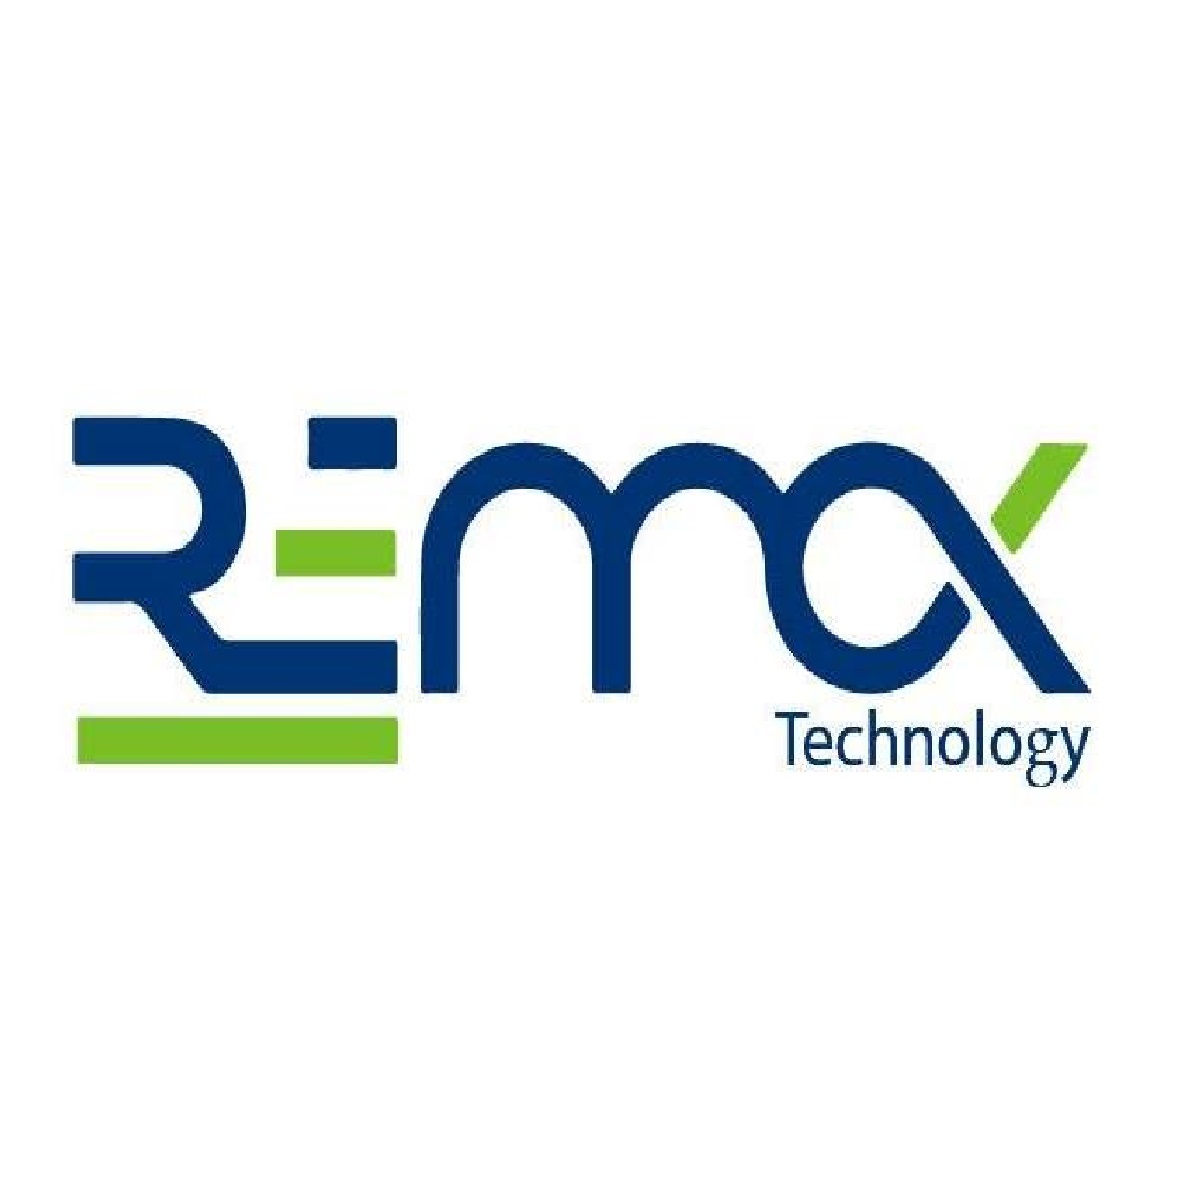 Remax Technology